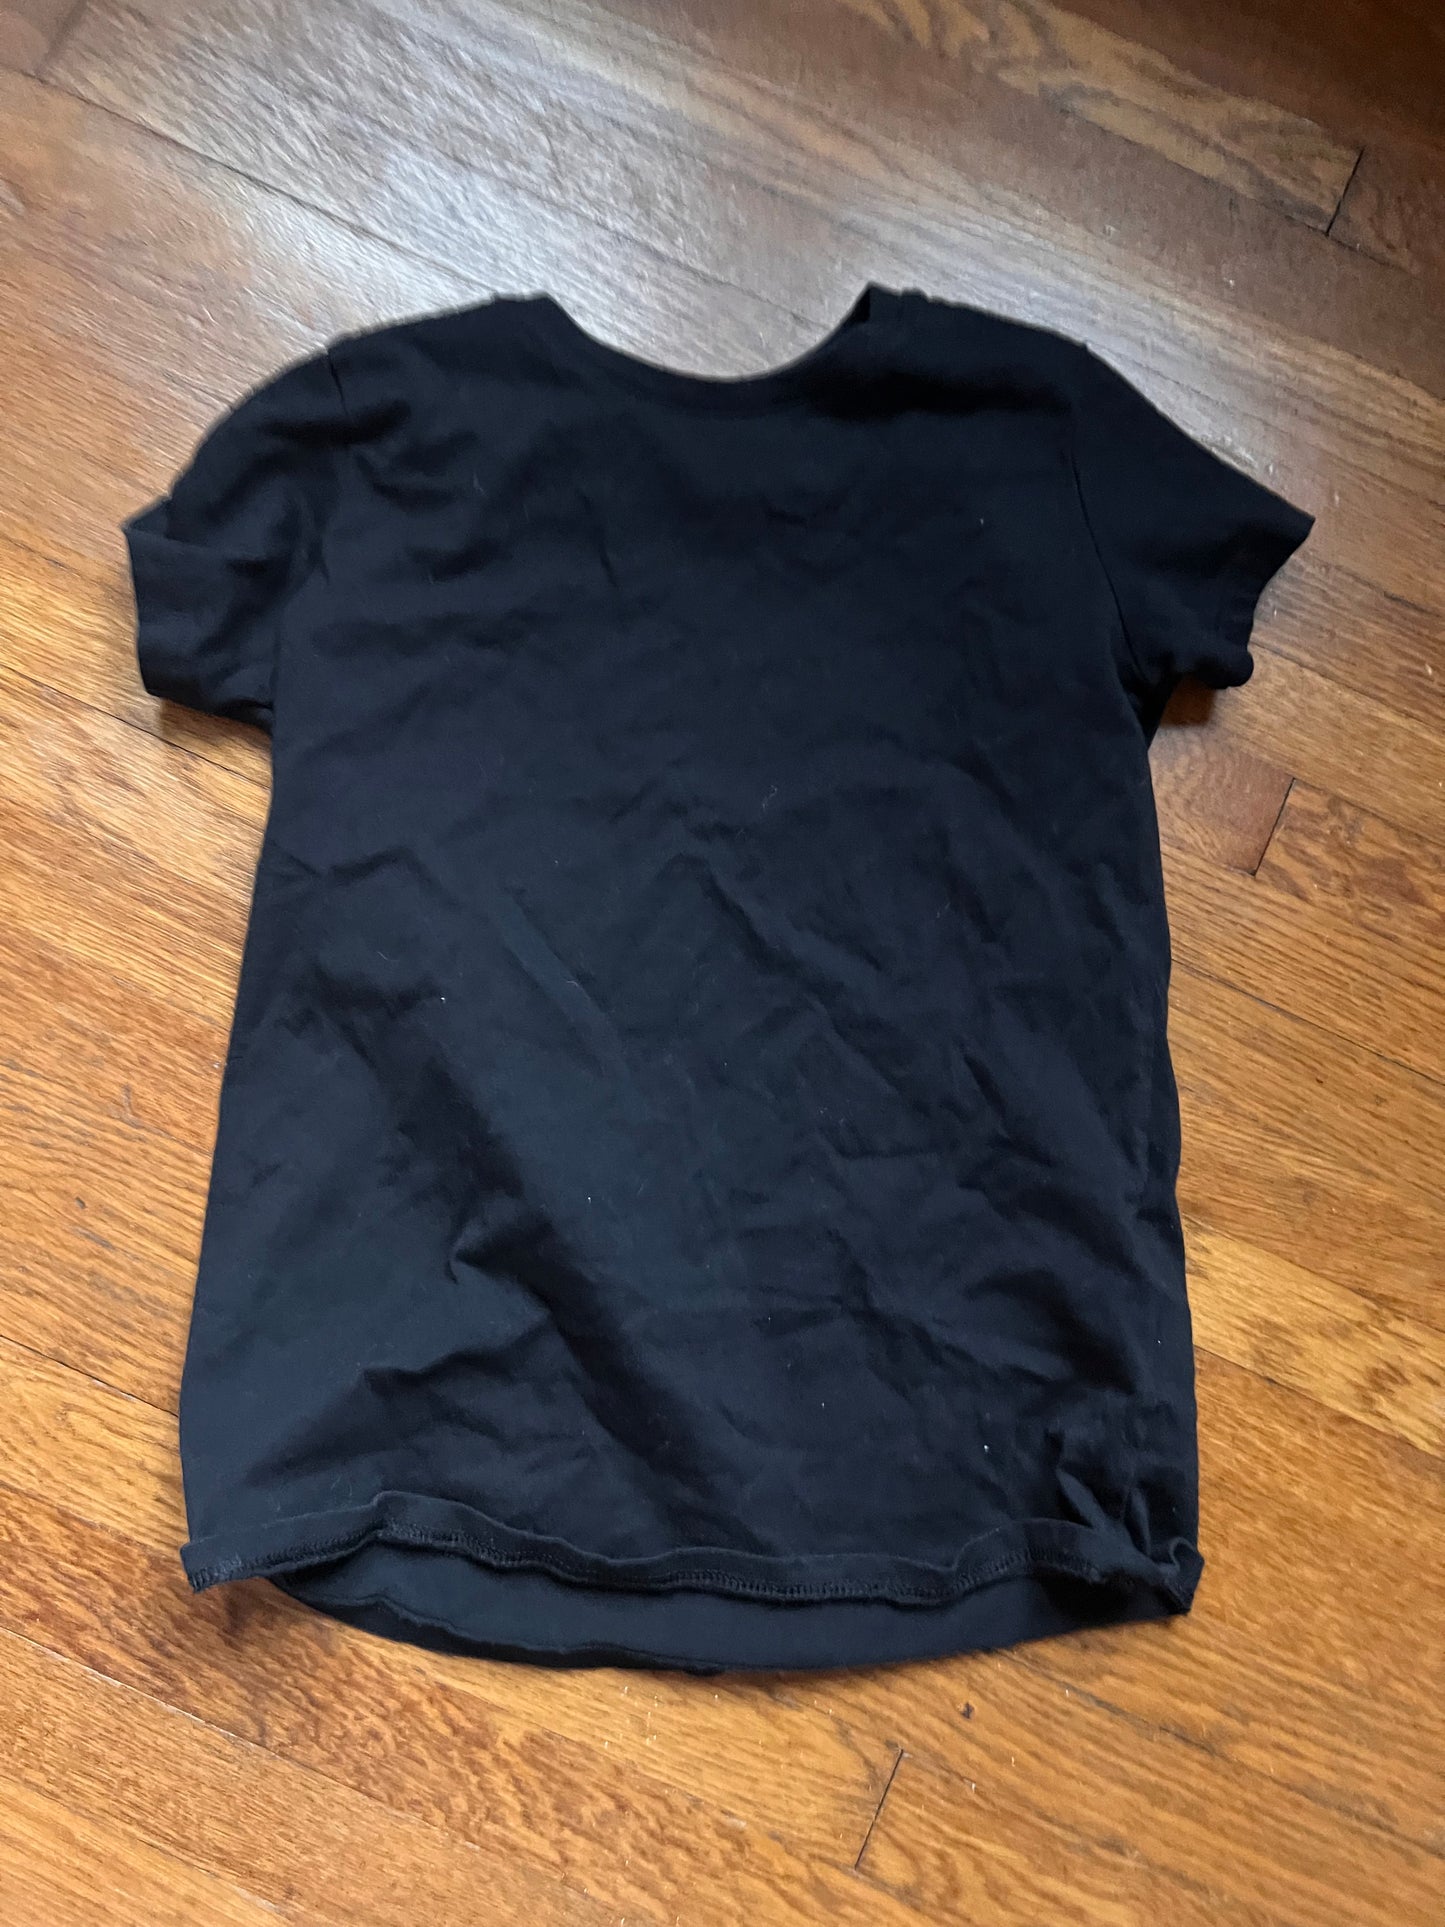 White and Black T Shirt Bundle Size 5 PPU 45212